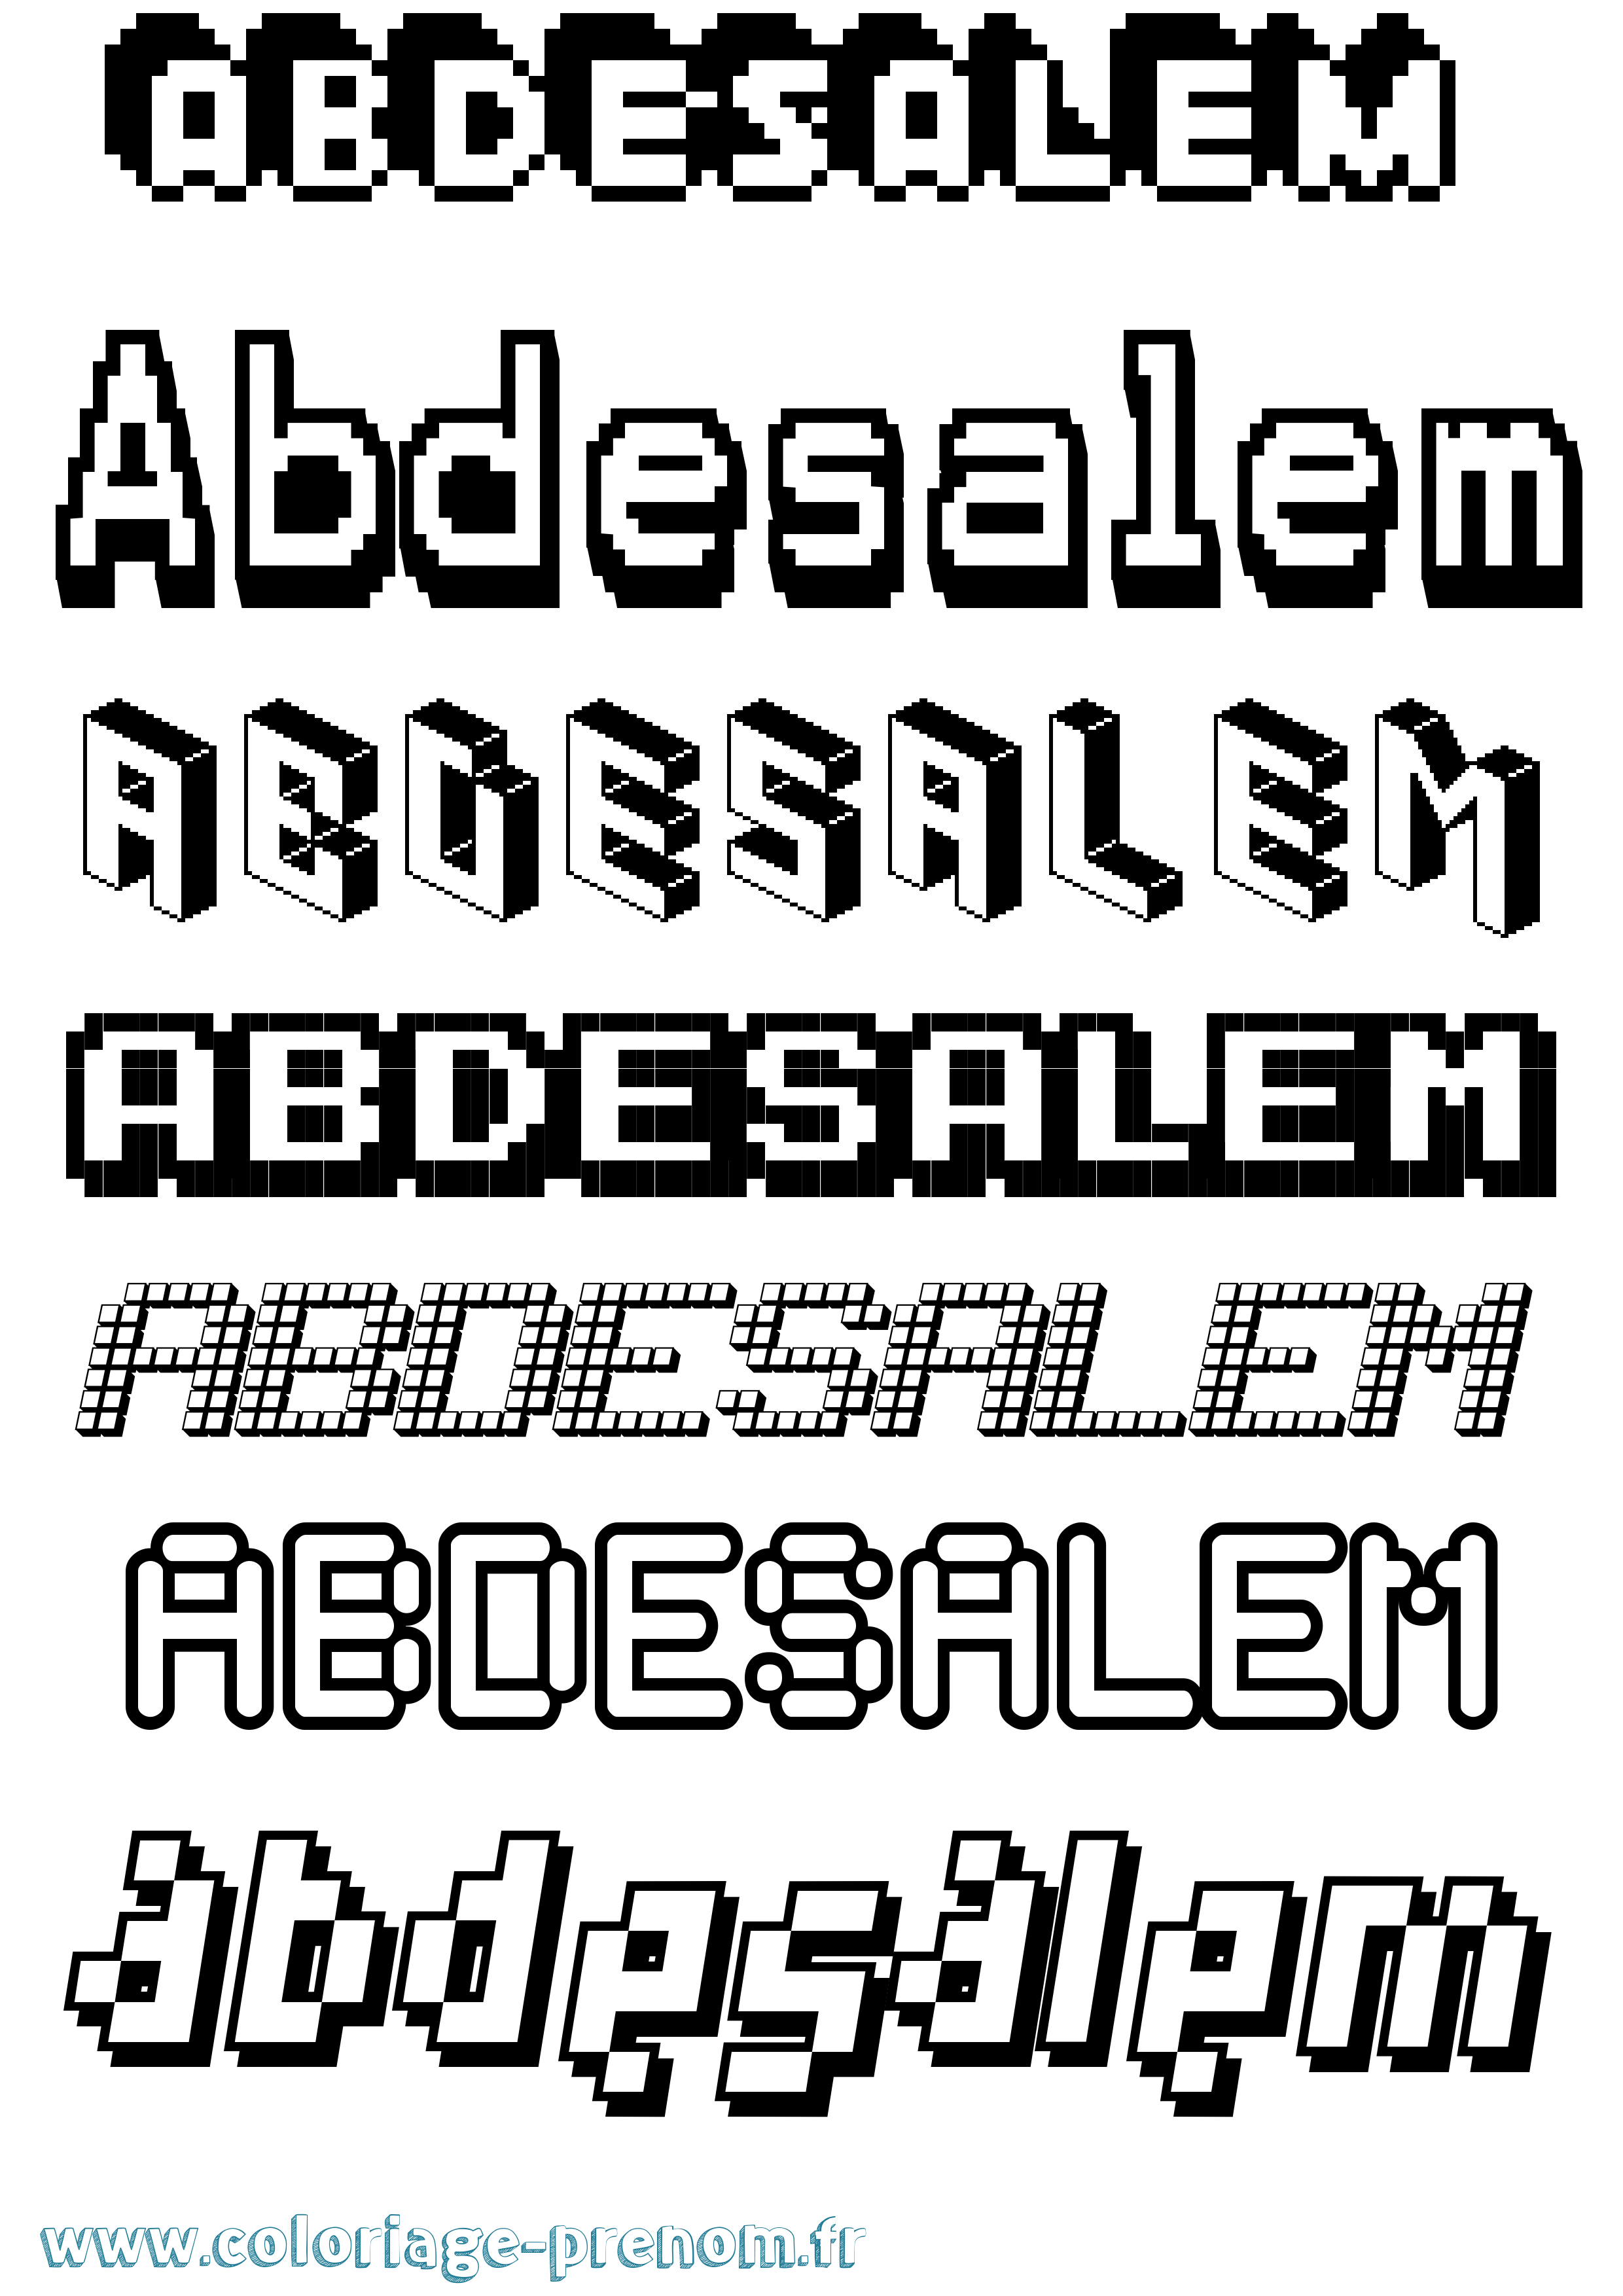 Coloriage prénom Abdesalem Pixel